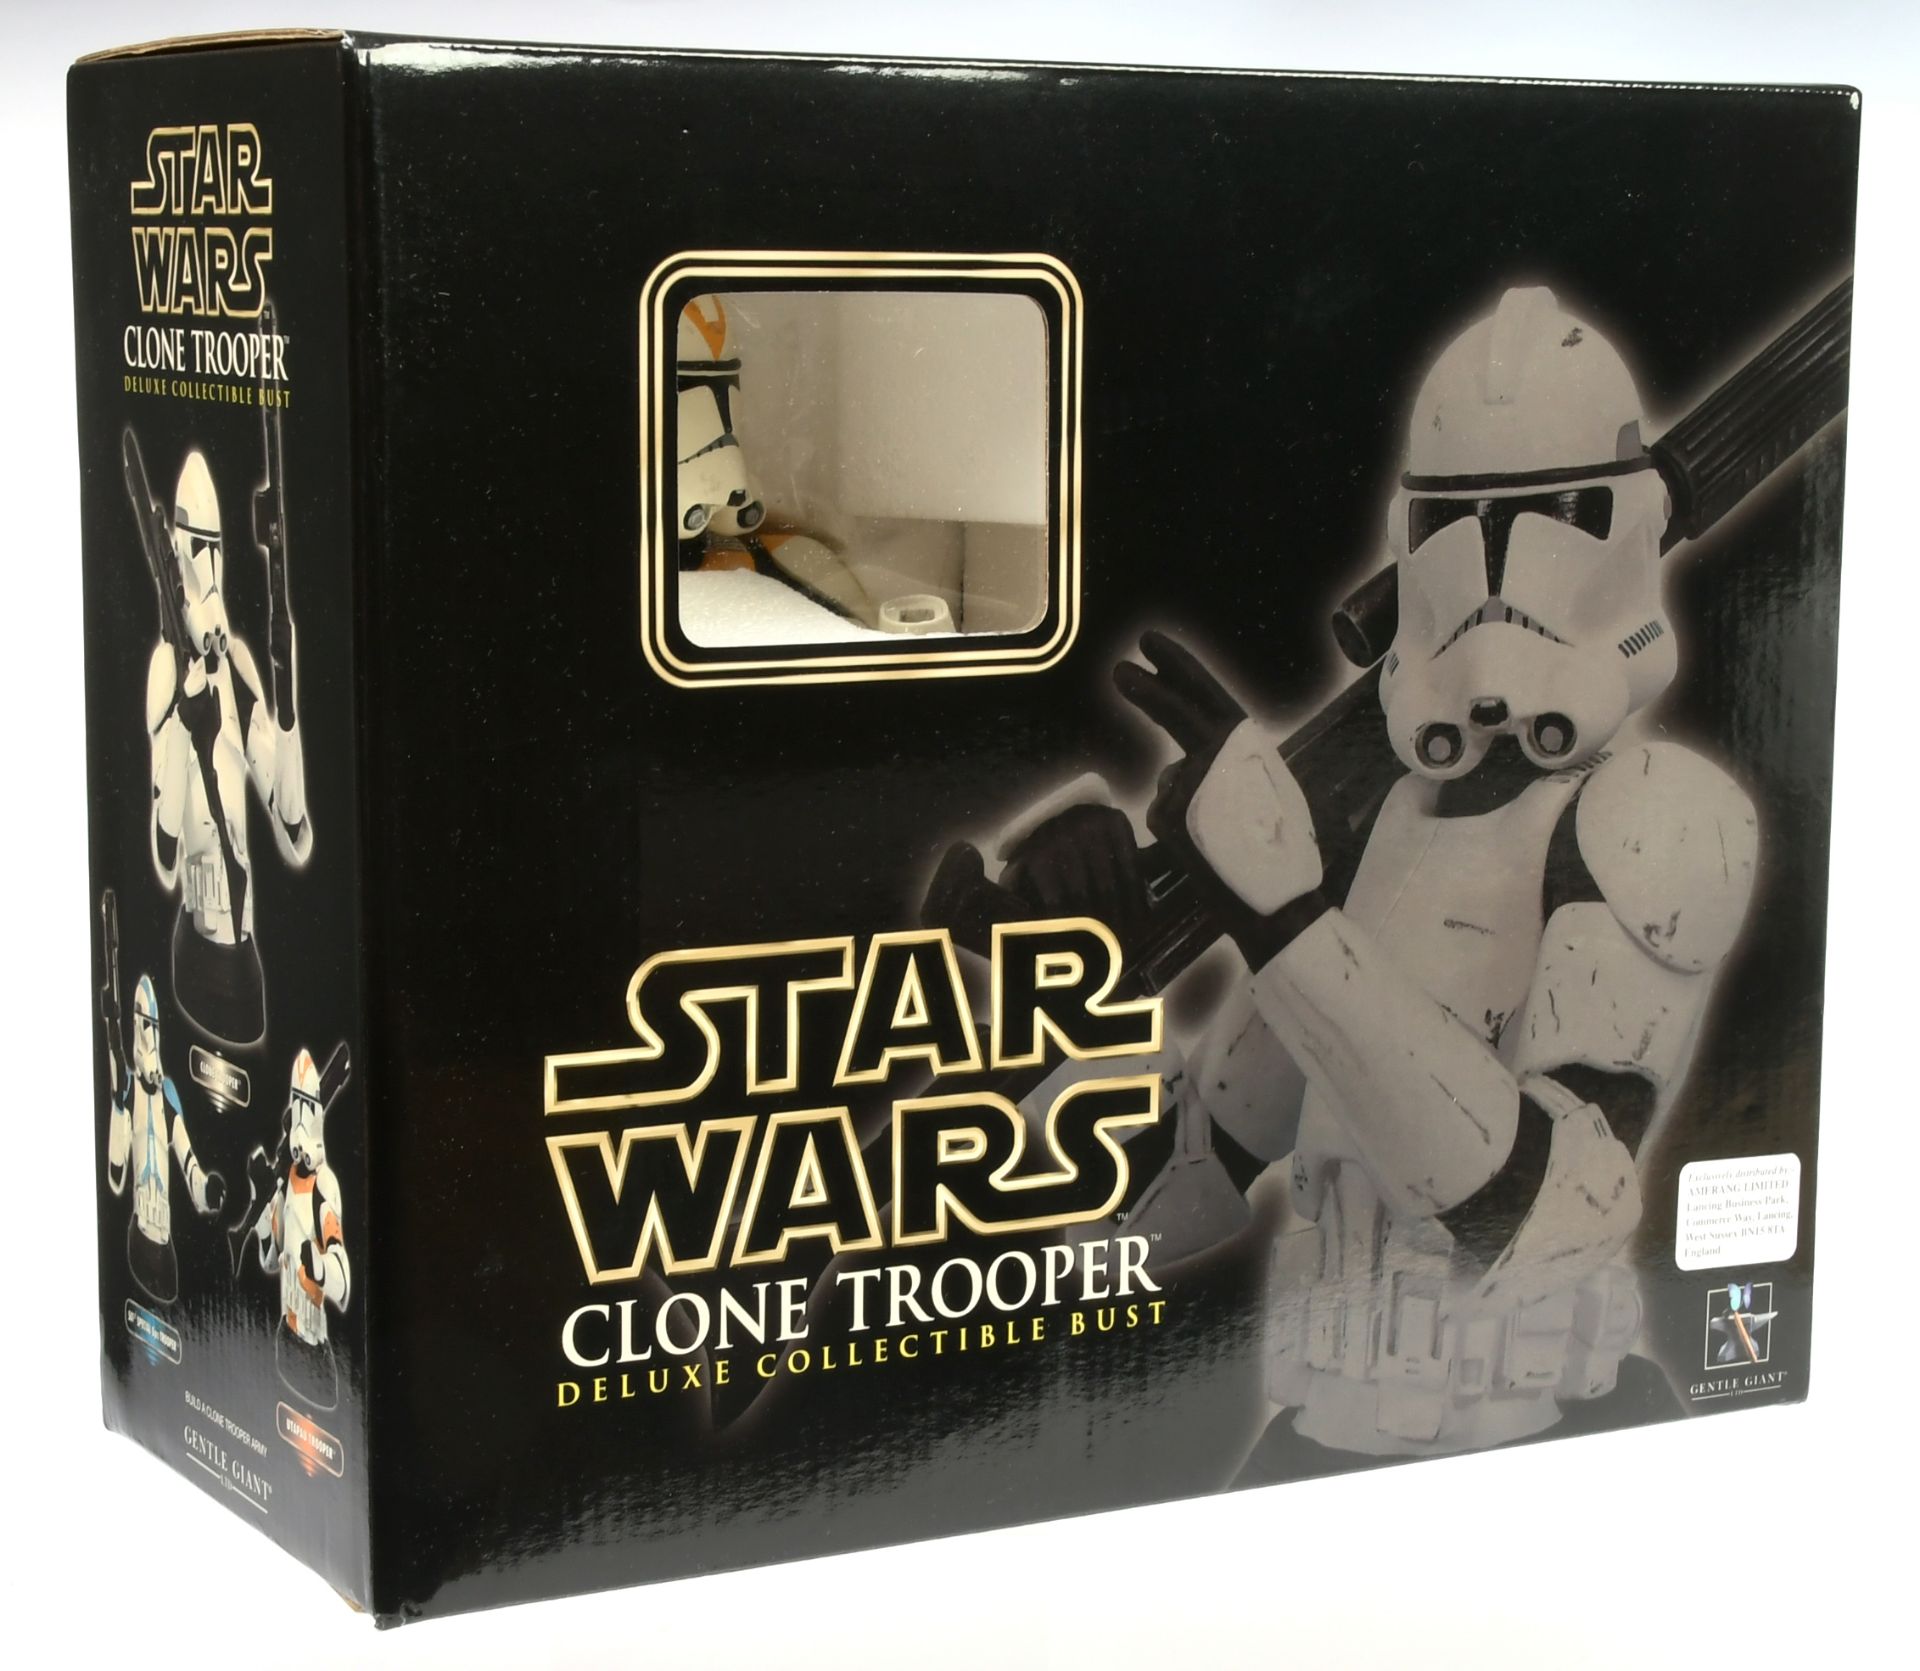 Gentle Giant Star Wars Clone Trooper (Utapau Trooper) Deluxe collectible bust